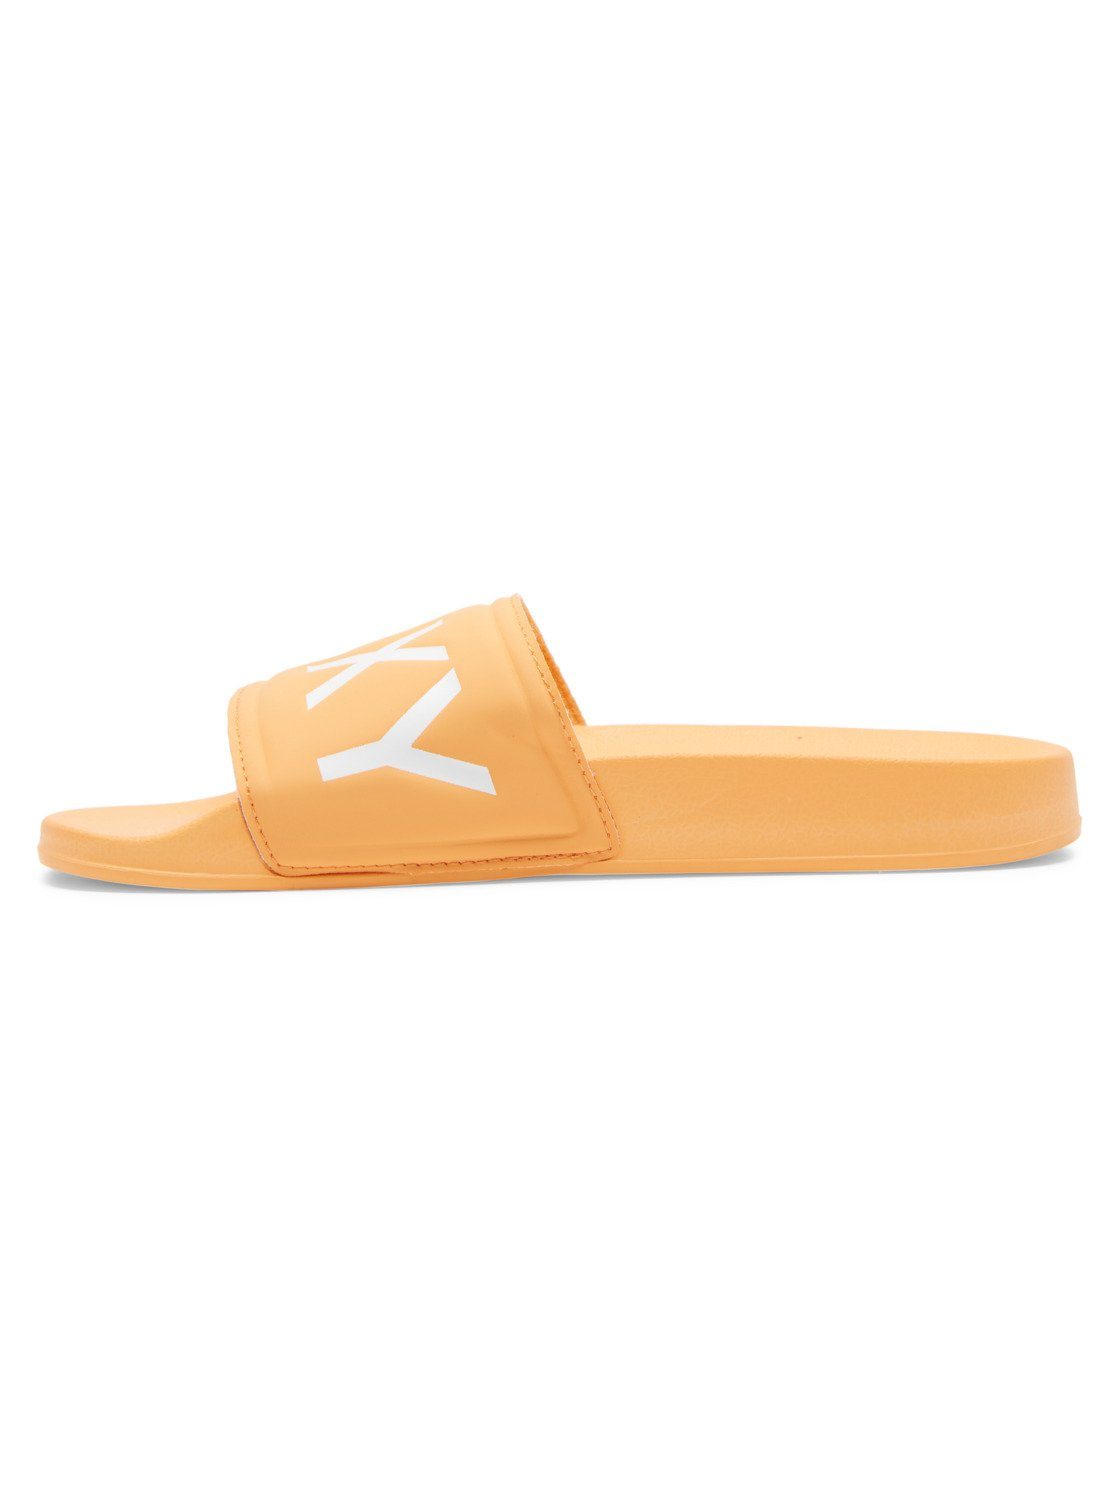 Roxy Slippy Sandale Classic Orange